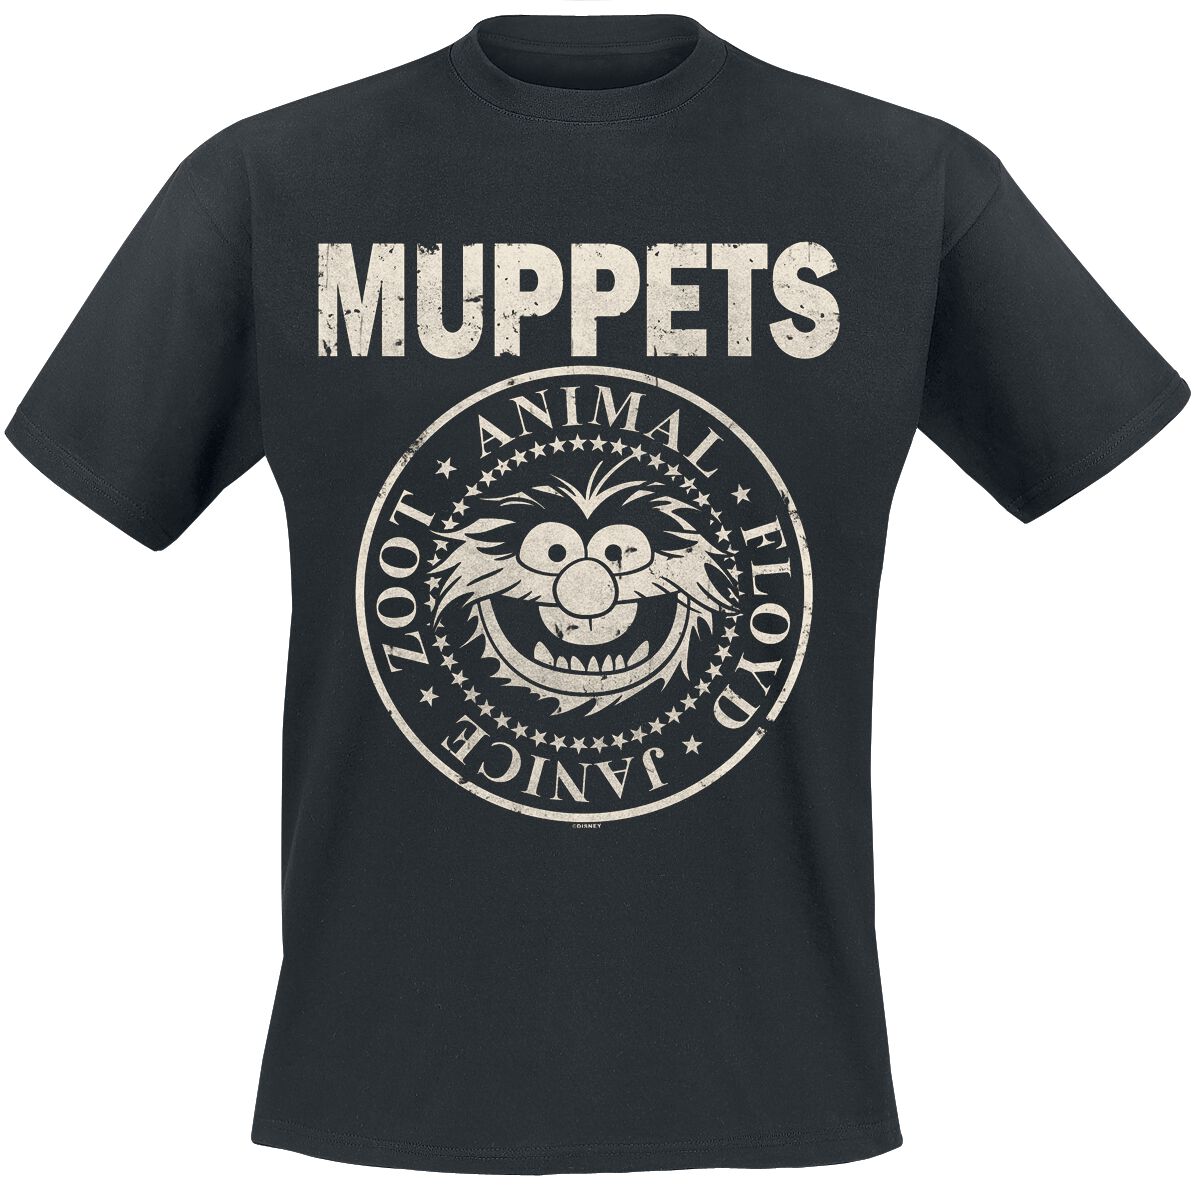 Die Muppets Animal - Rock ´n Roll T-Shirt schwarz in M